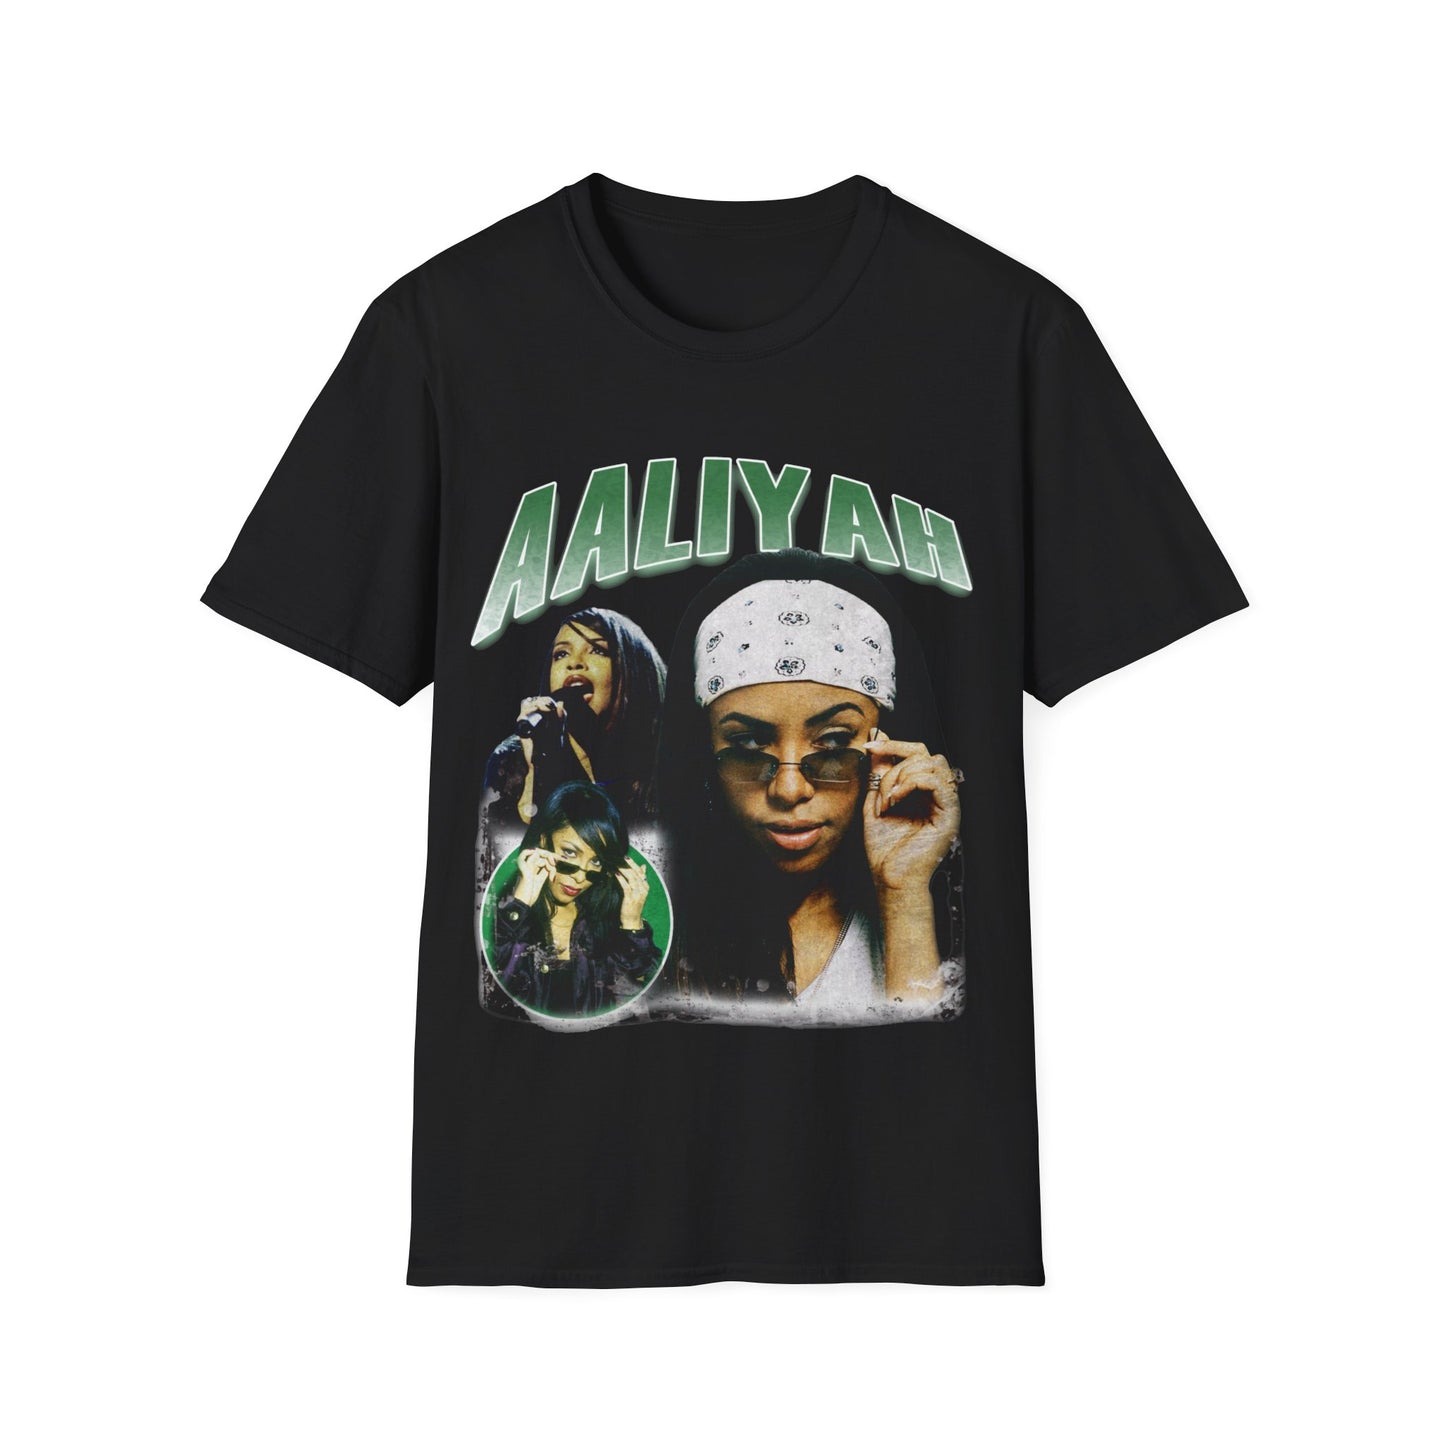 Vintage Aaliyah Shirt!